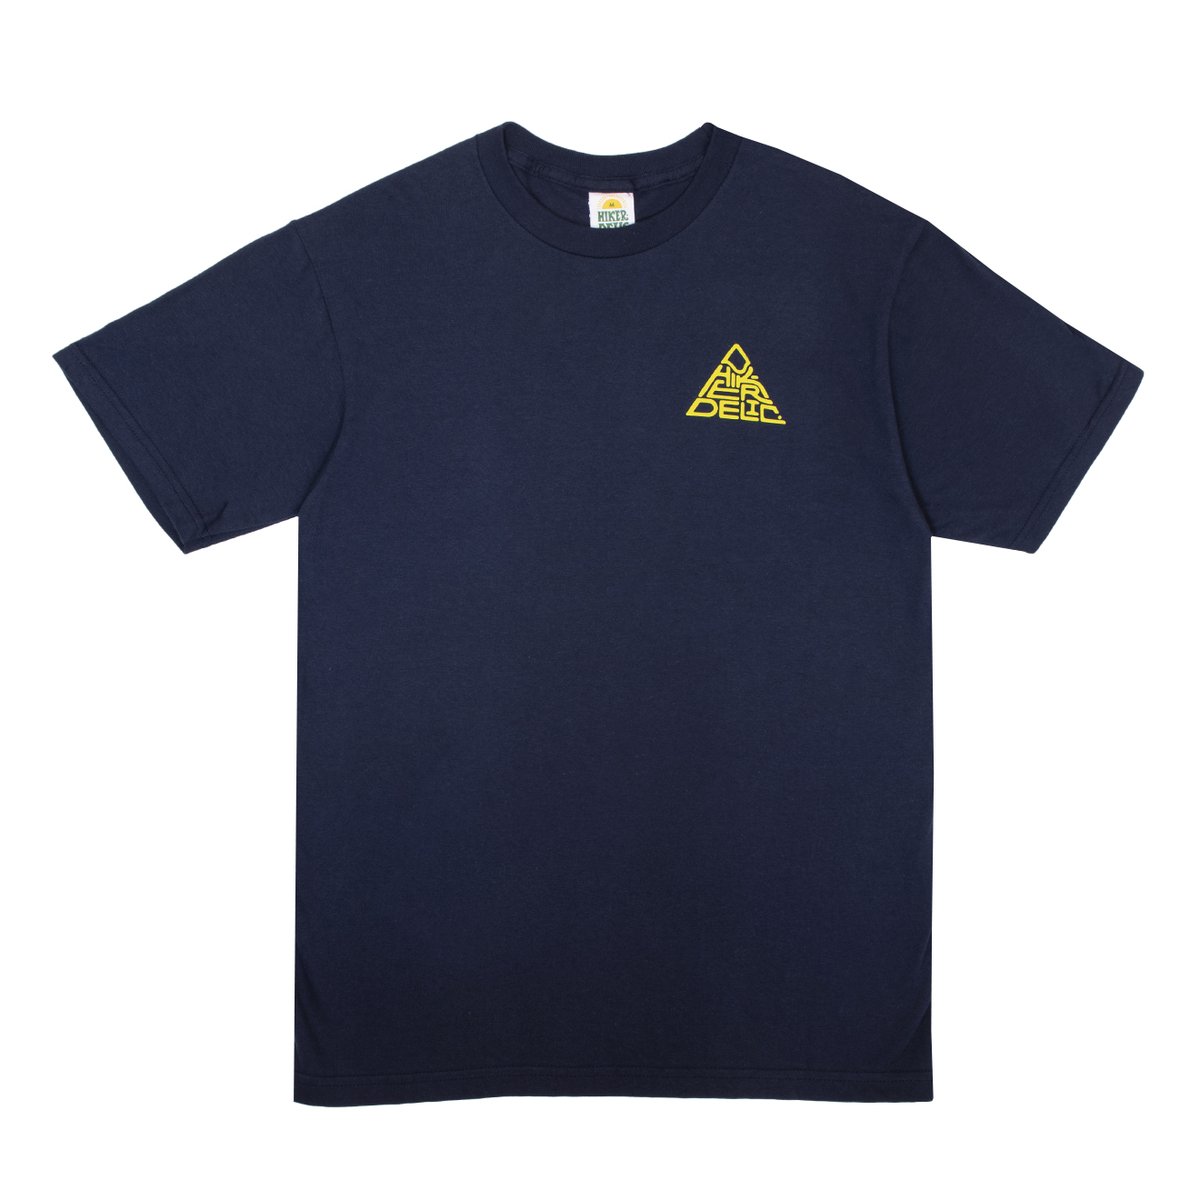 Hikerdelic Mountain Logo Tee - Navy / Yellow